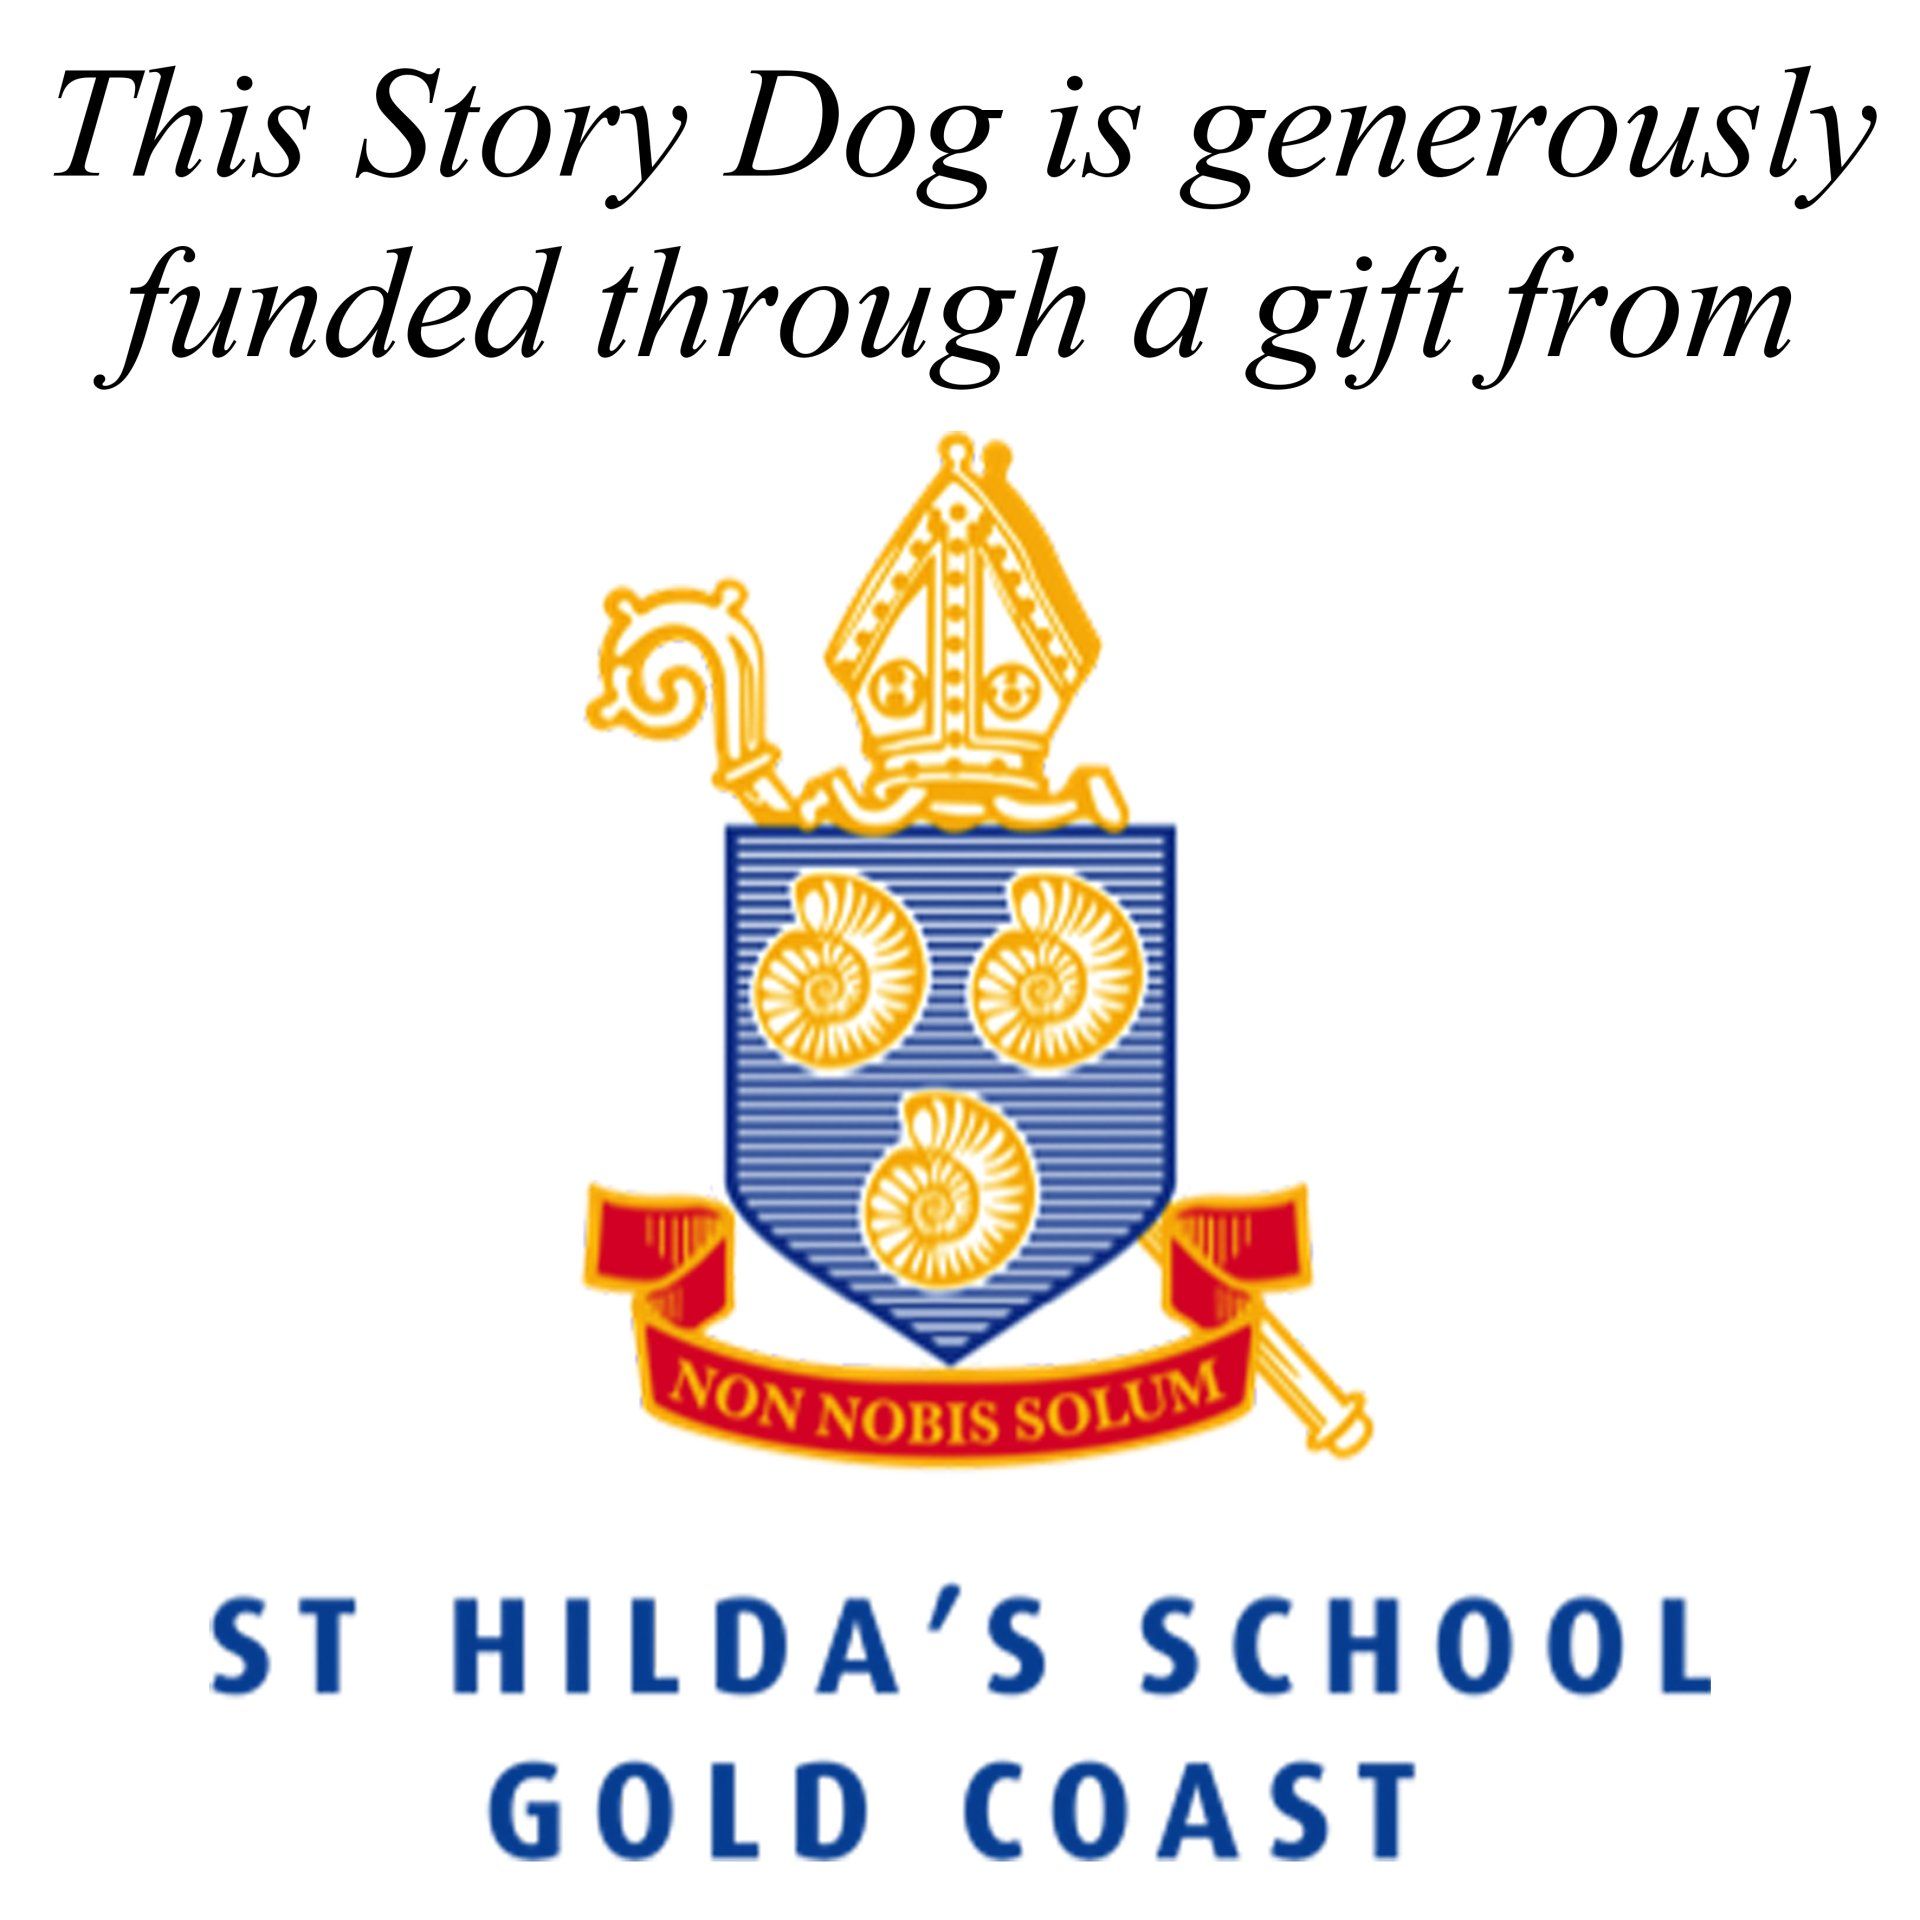 St Hilda's School Gold Coast